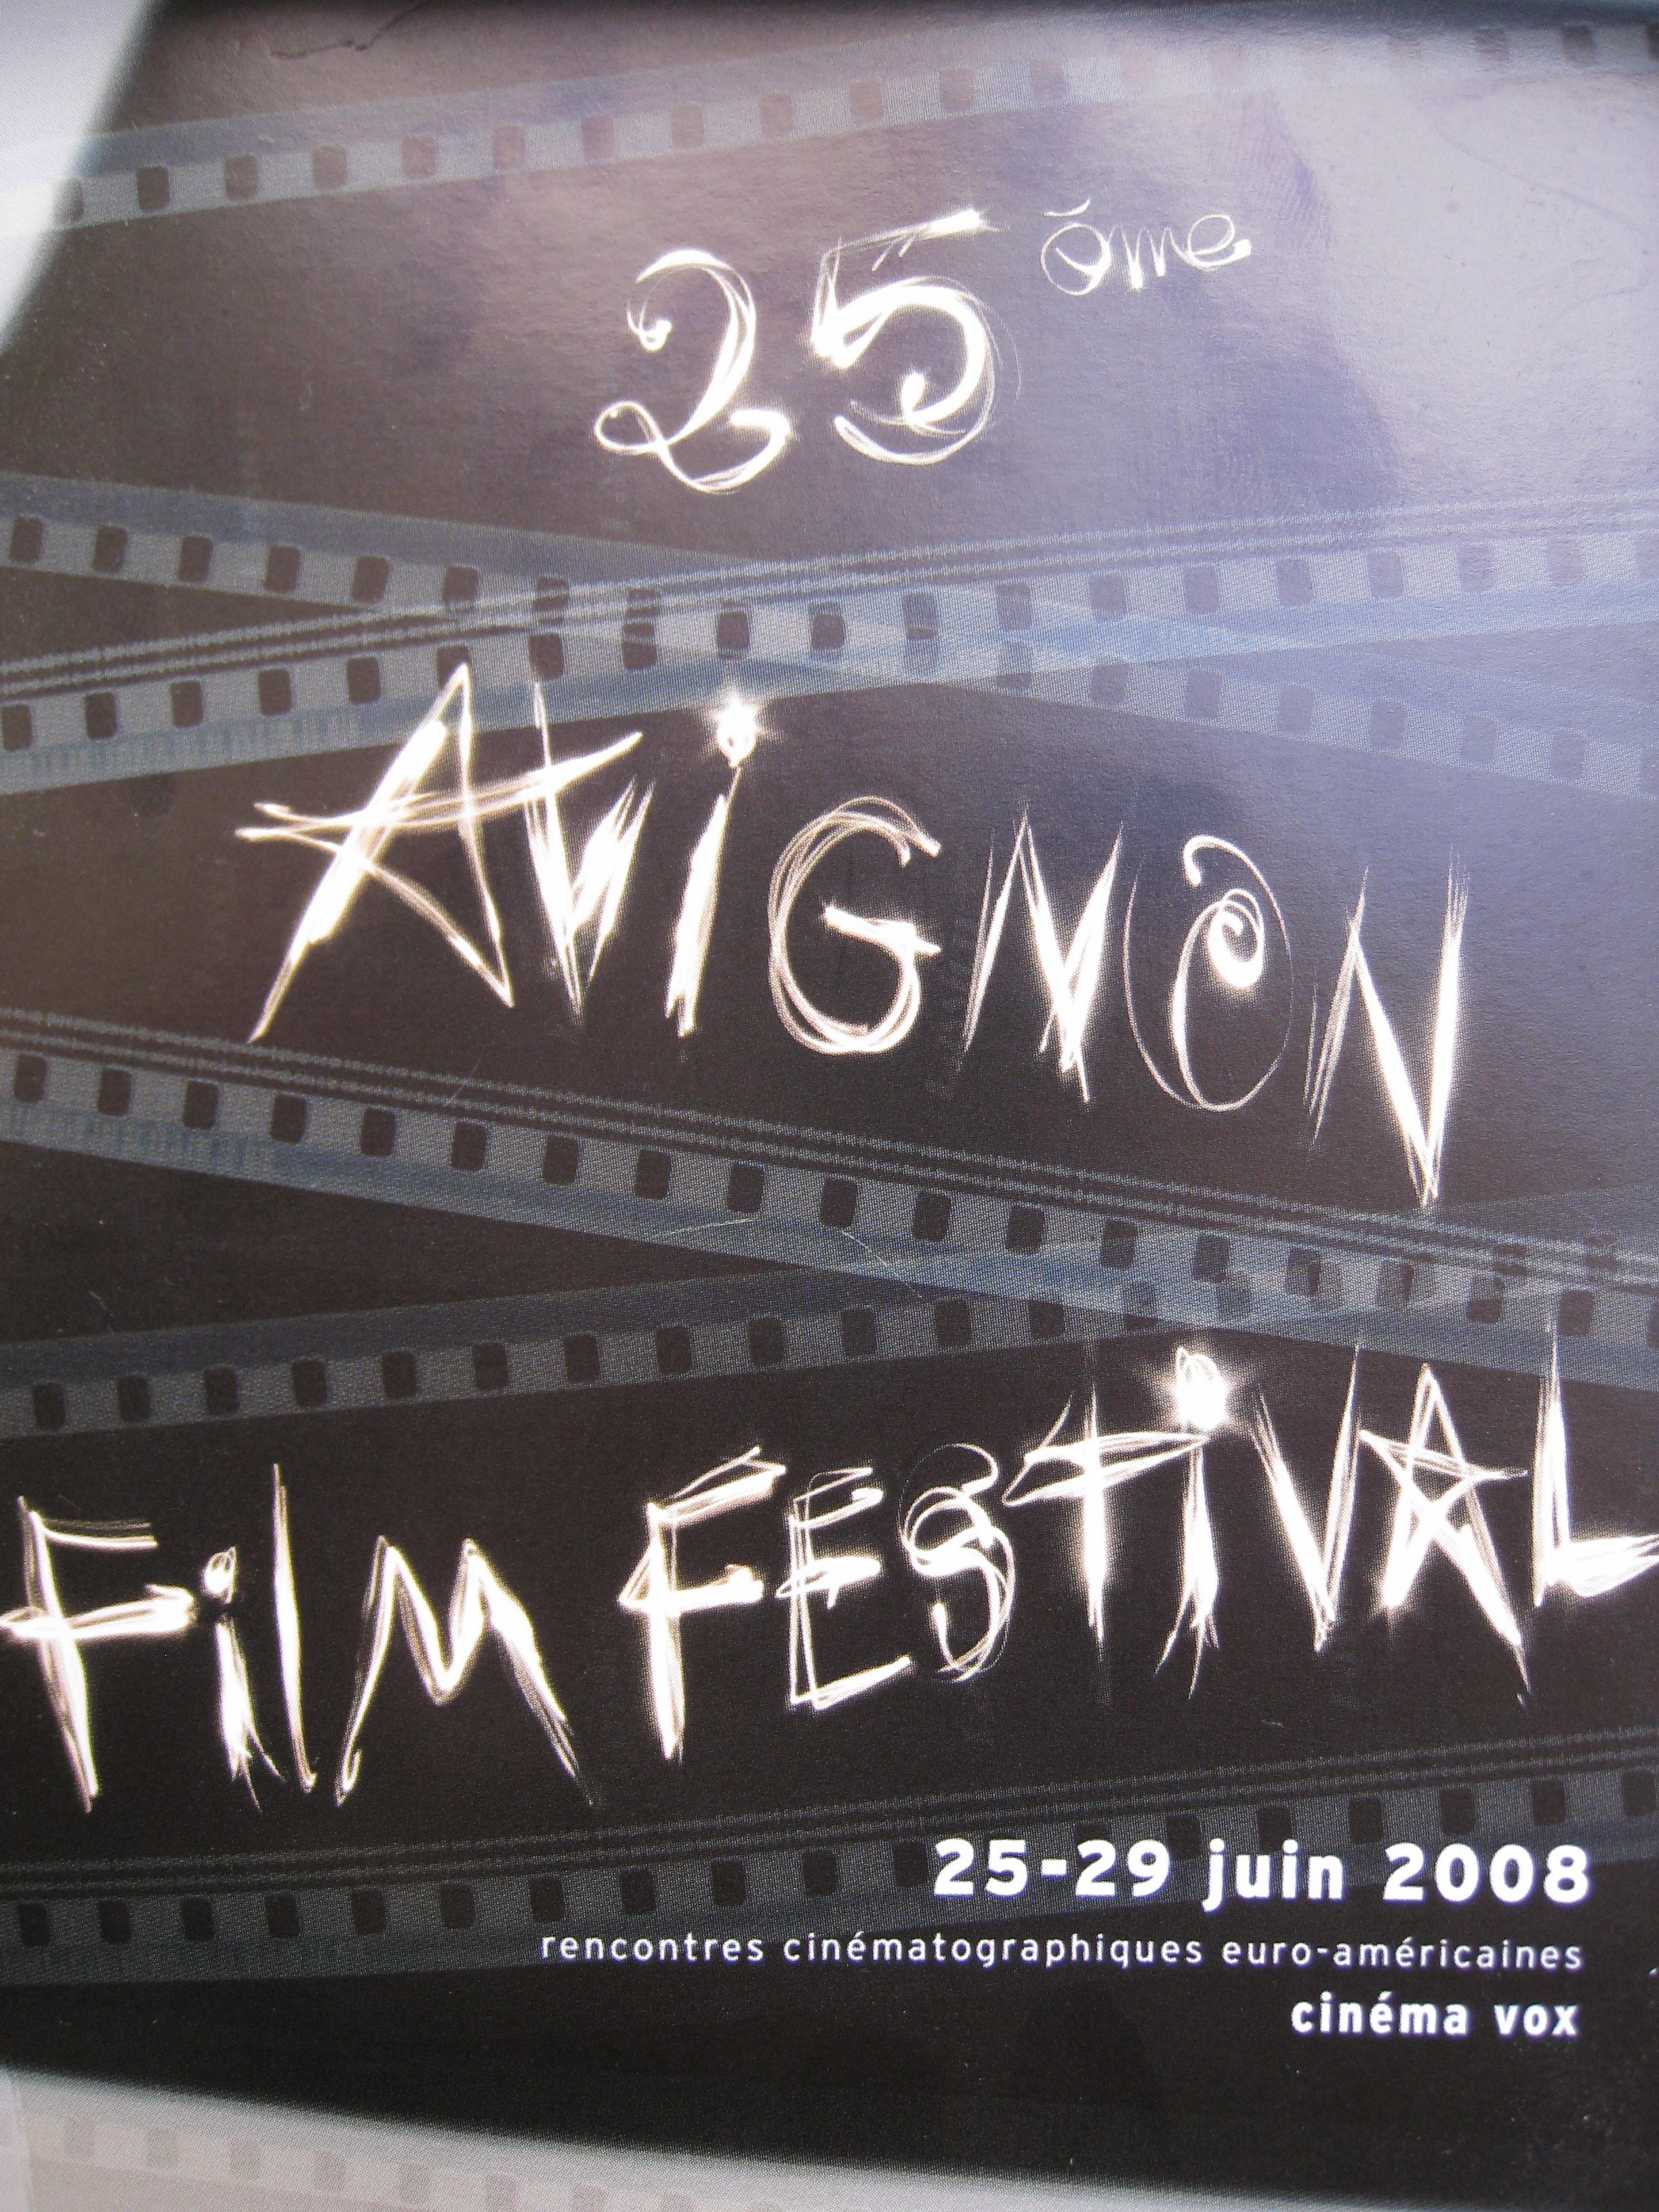 the Avignon Film Festival,